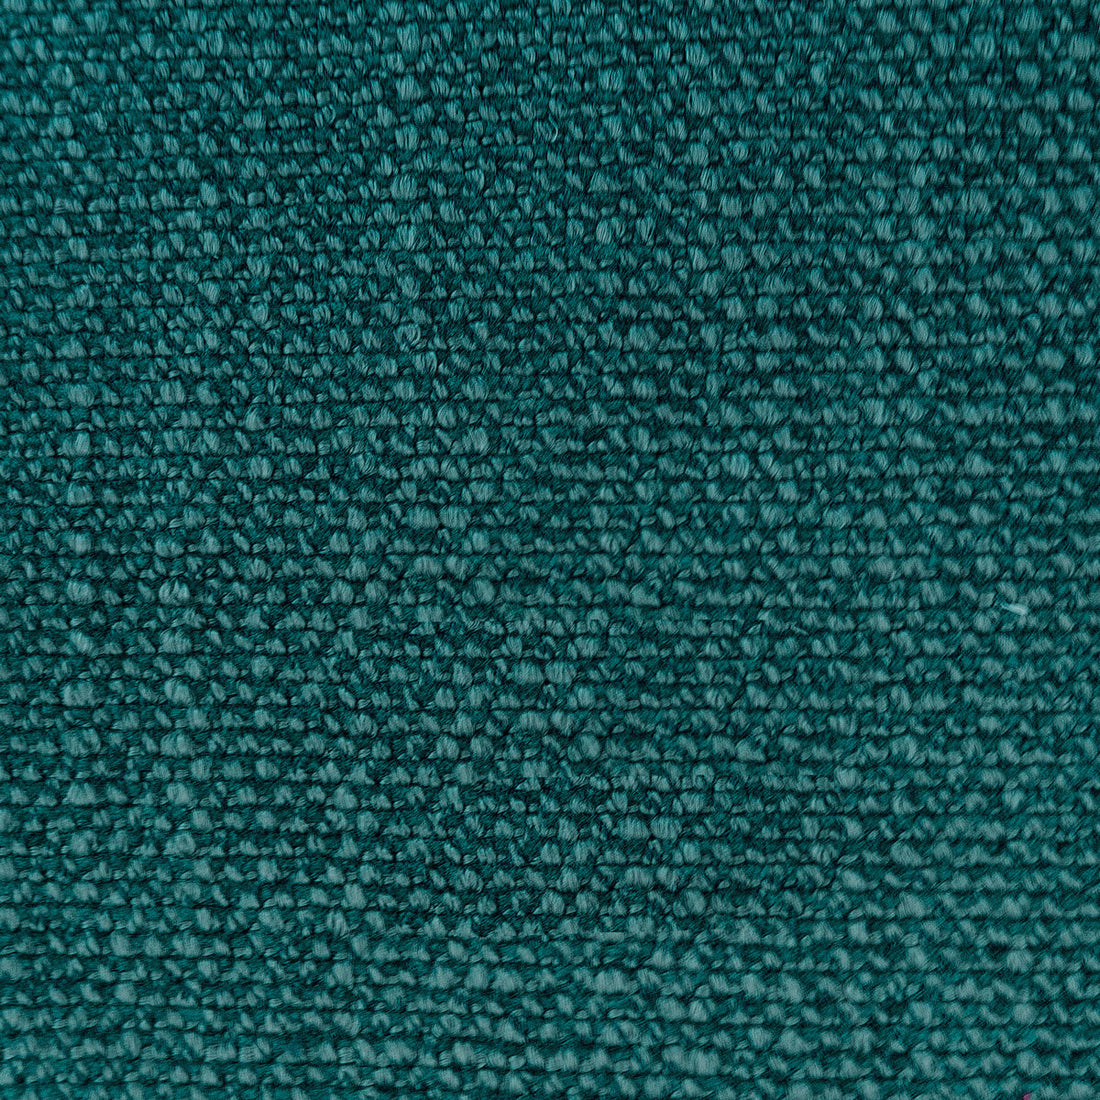 Hugo fabric in azul verde oceano color - pattern LCT1053.011.0 - by Gaston y Daniela in the Lorenzo Castillo VI collection